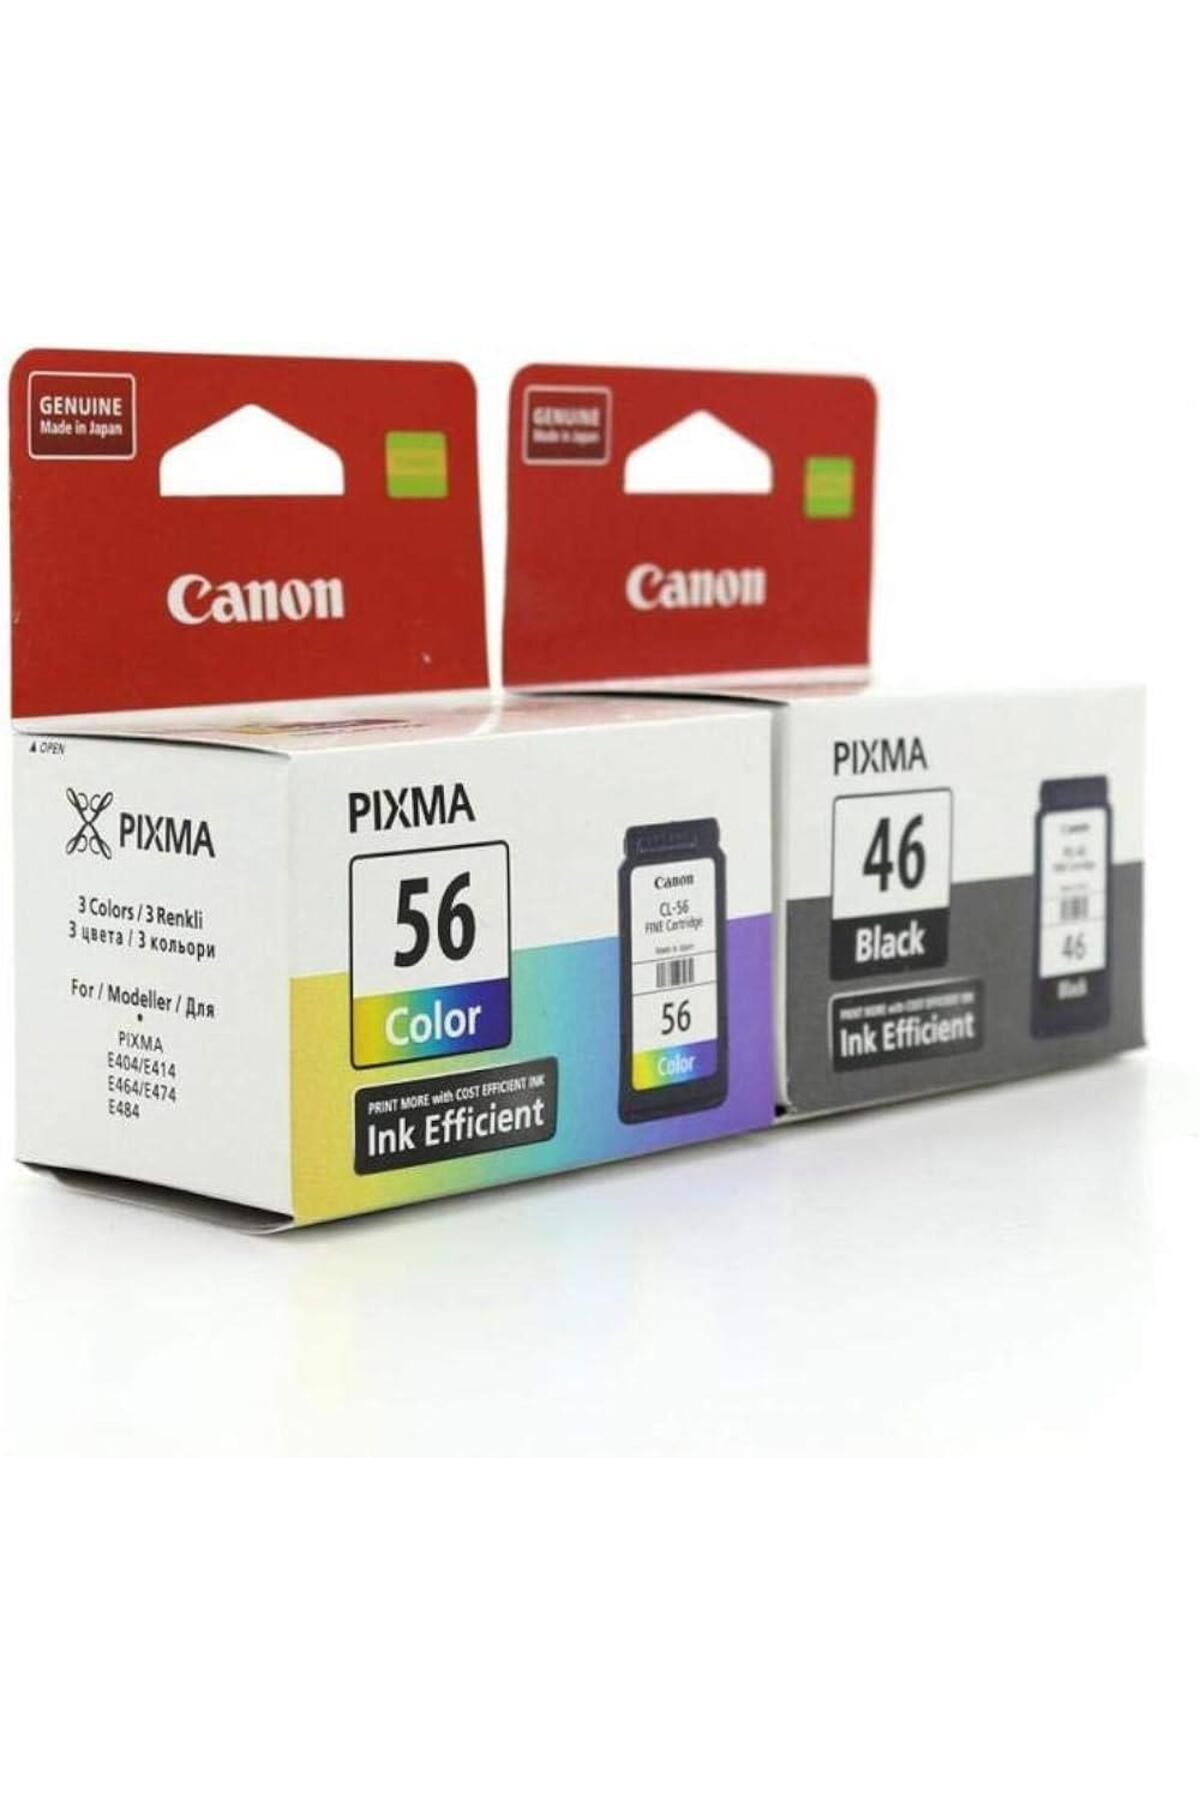 Canon Pixma E404 Kartuş / Pg46 / Cl56 Avantaj Paket Kartuş